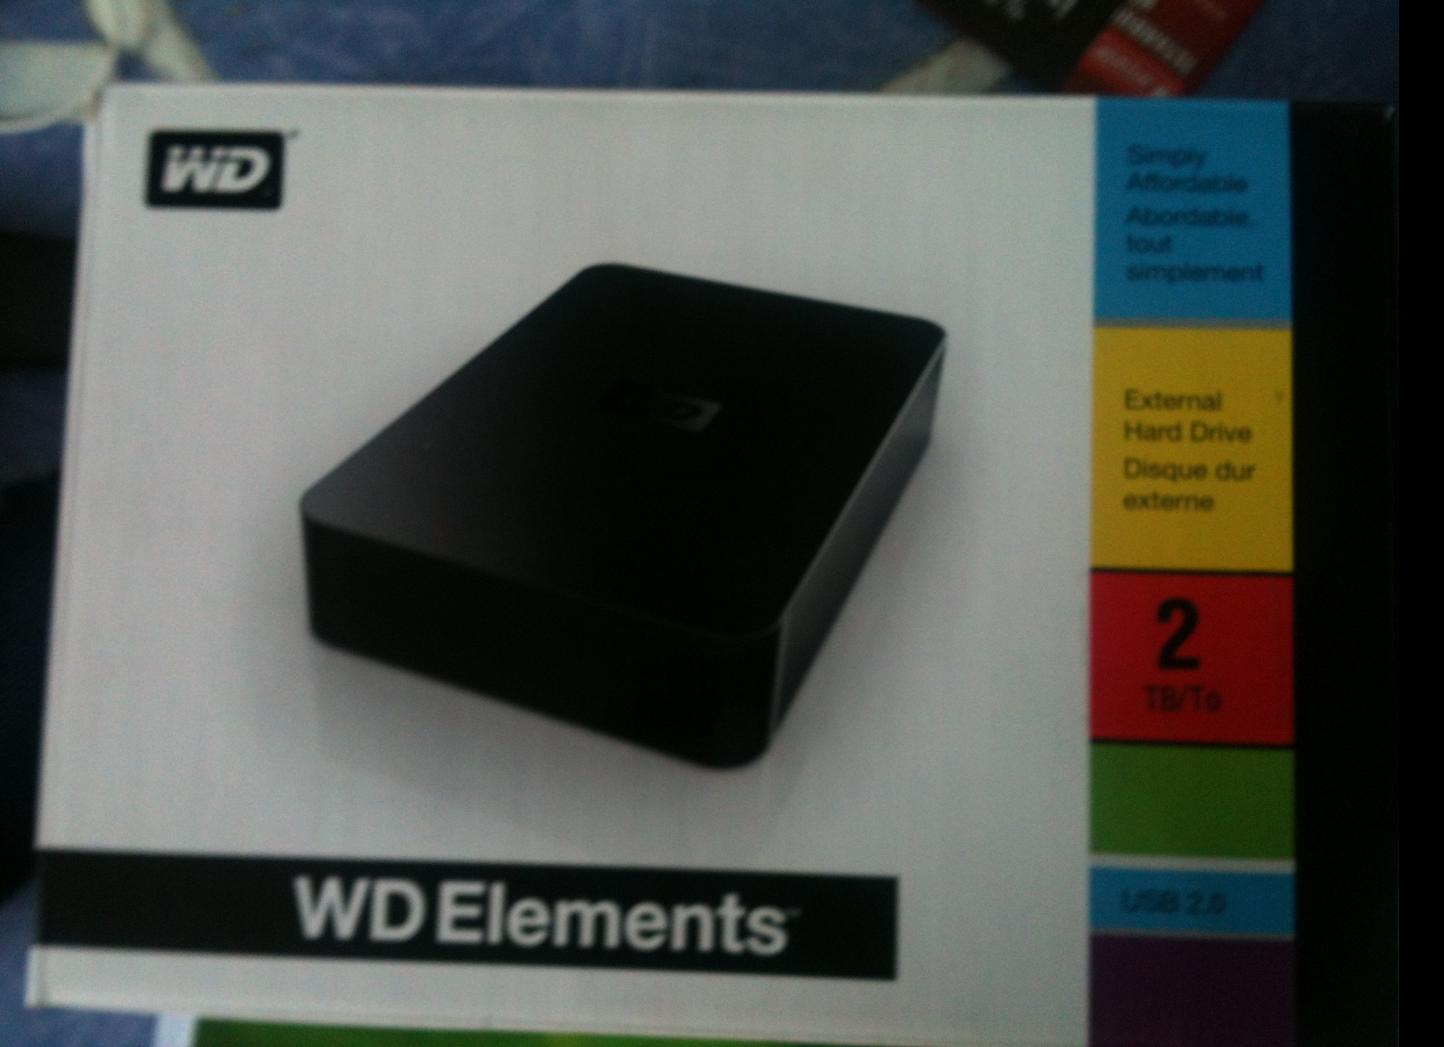  WD Elements 2TB Harddisk Kutusu Açılmamış 1 Sene Garantili 230 Lira